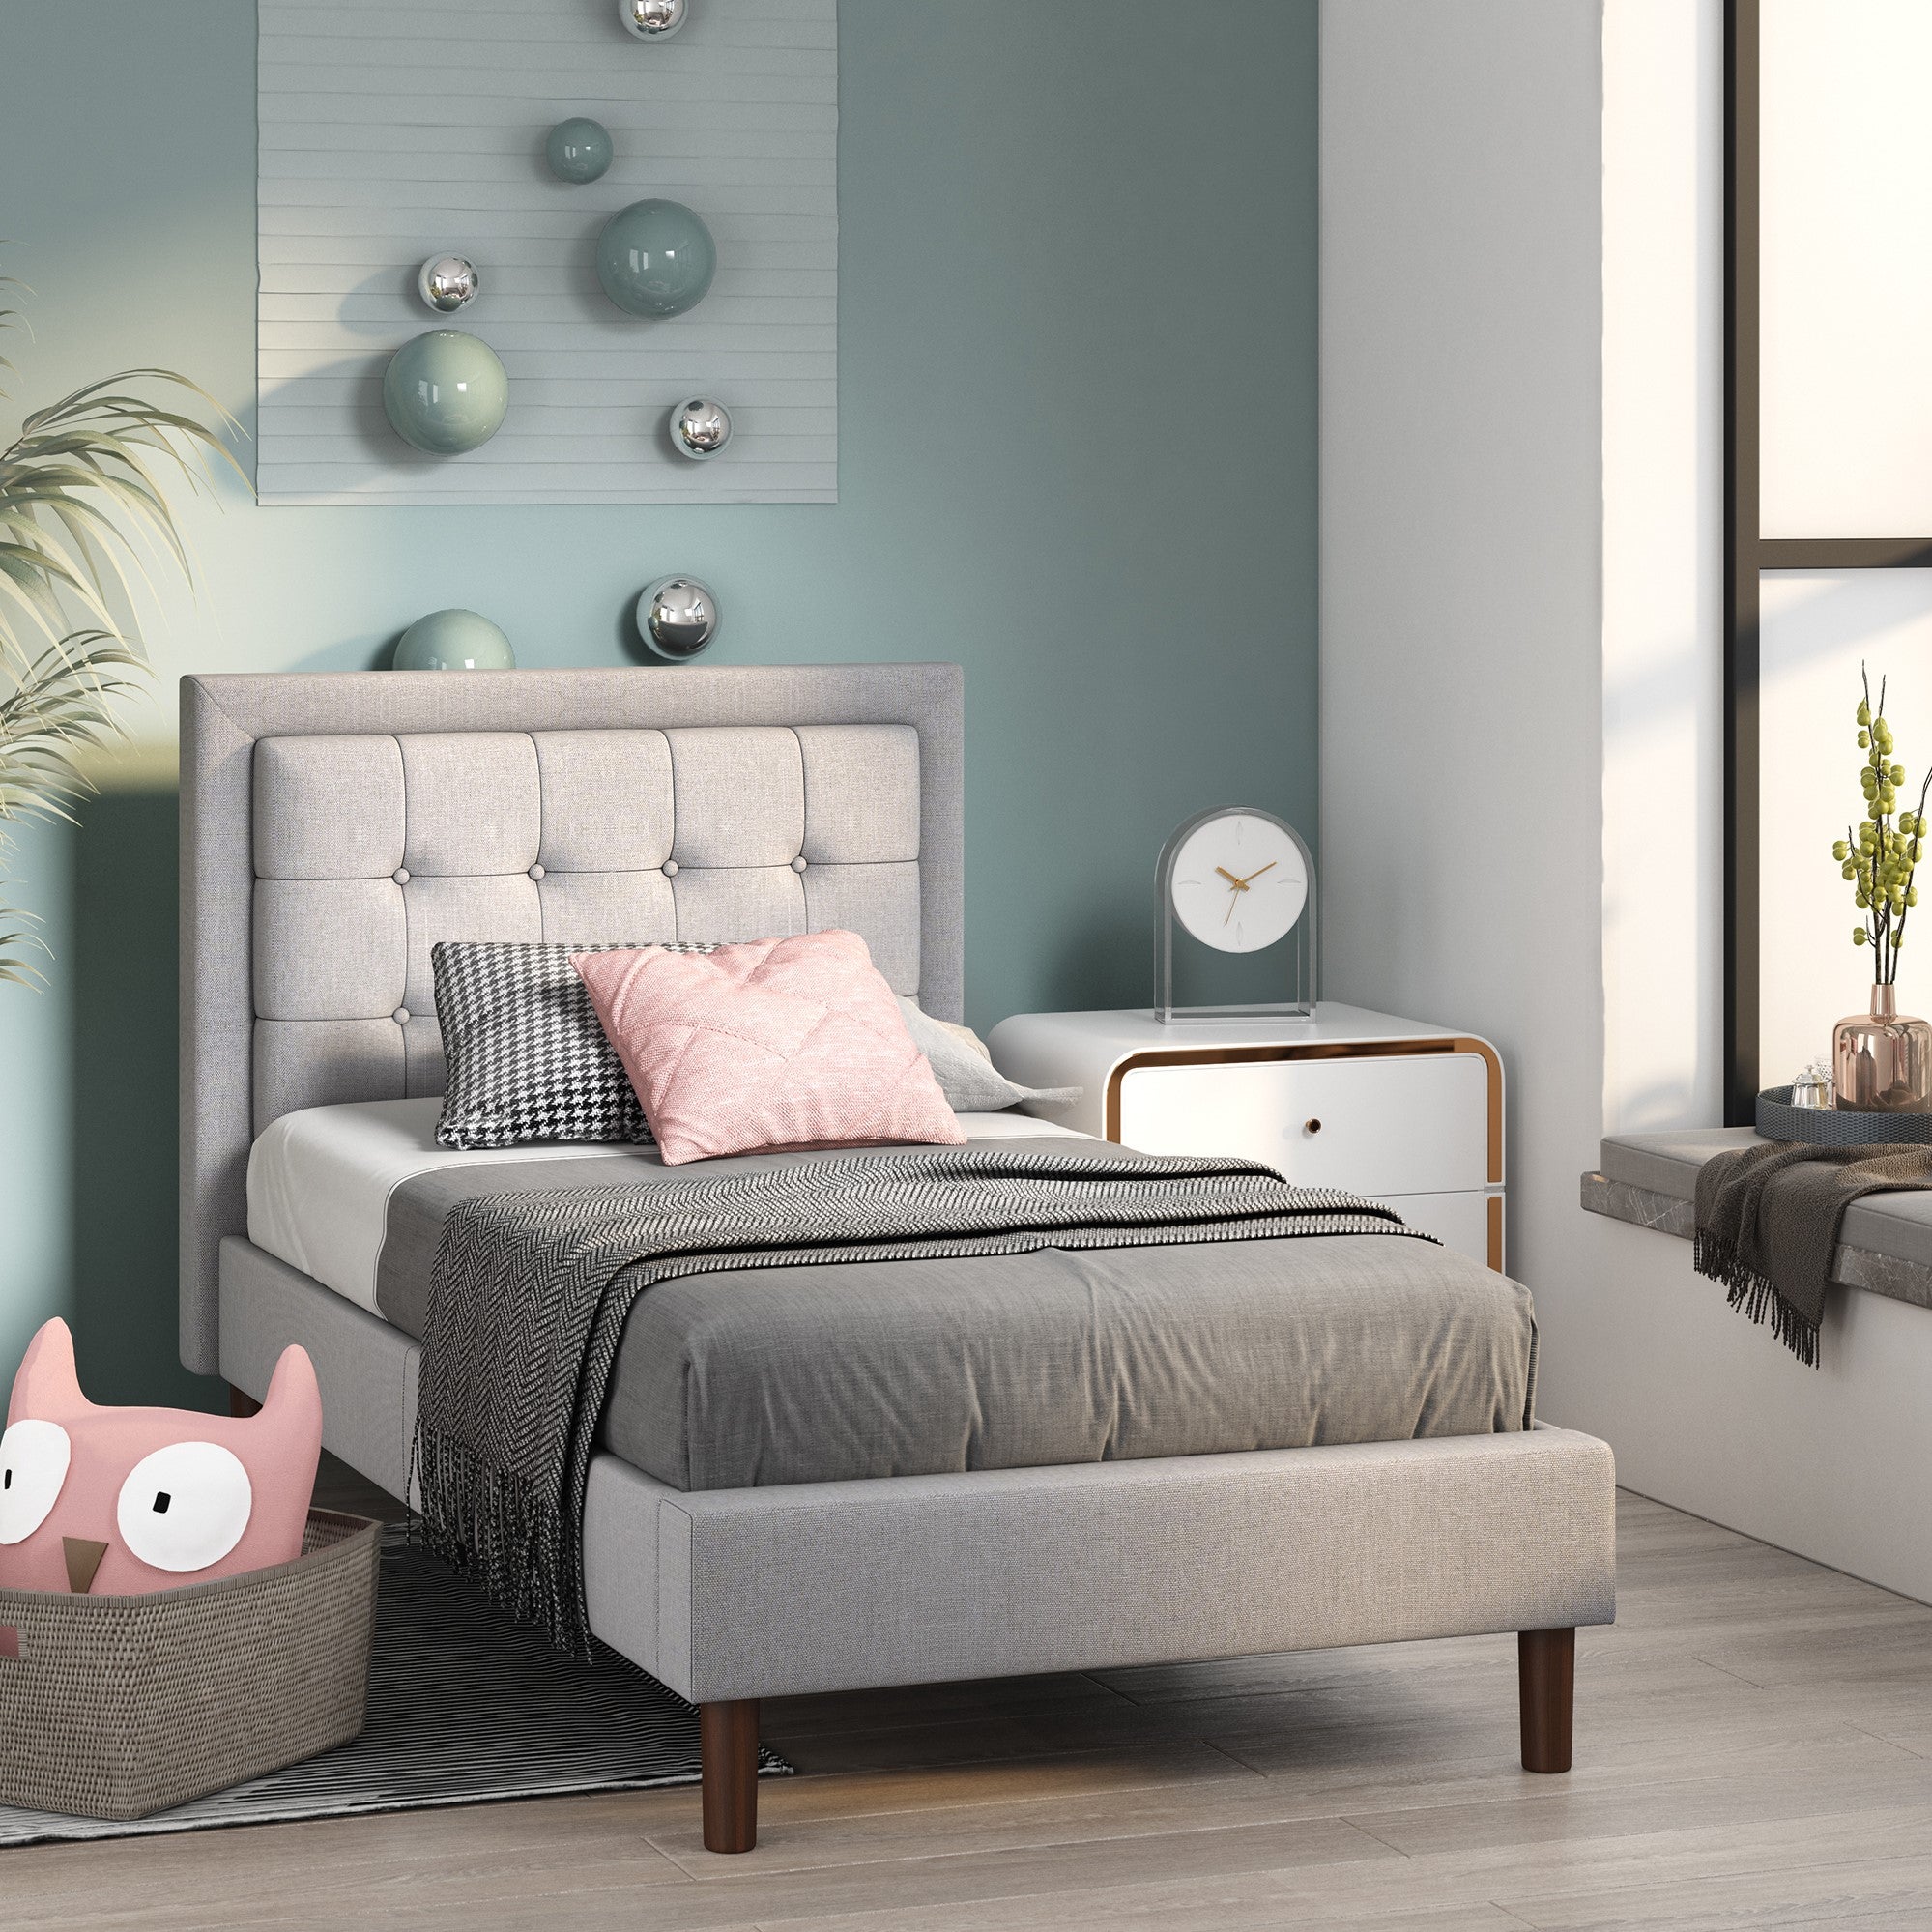 Zinus Kids Dachelle Luxury Single Bed Frame - Upholstered Fabric